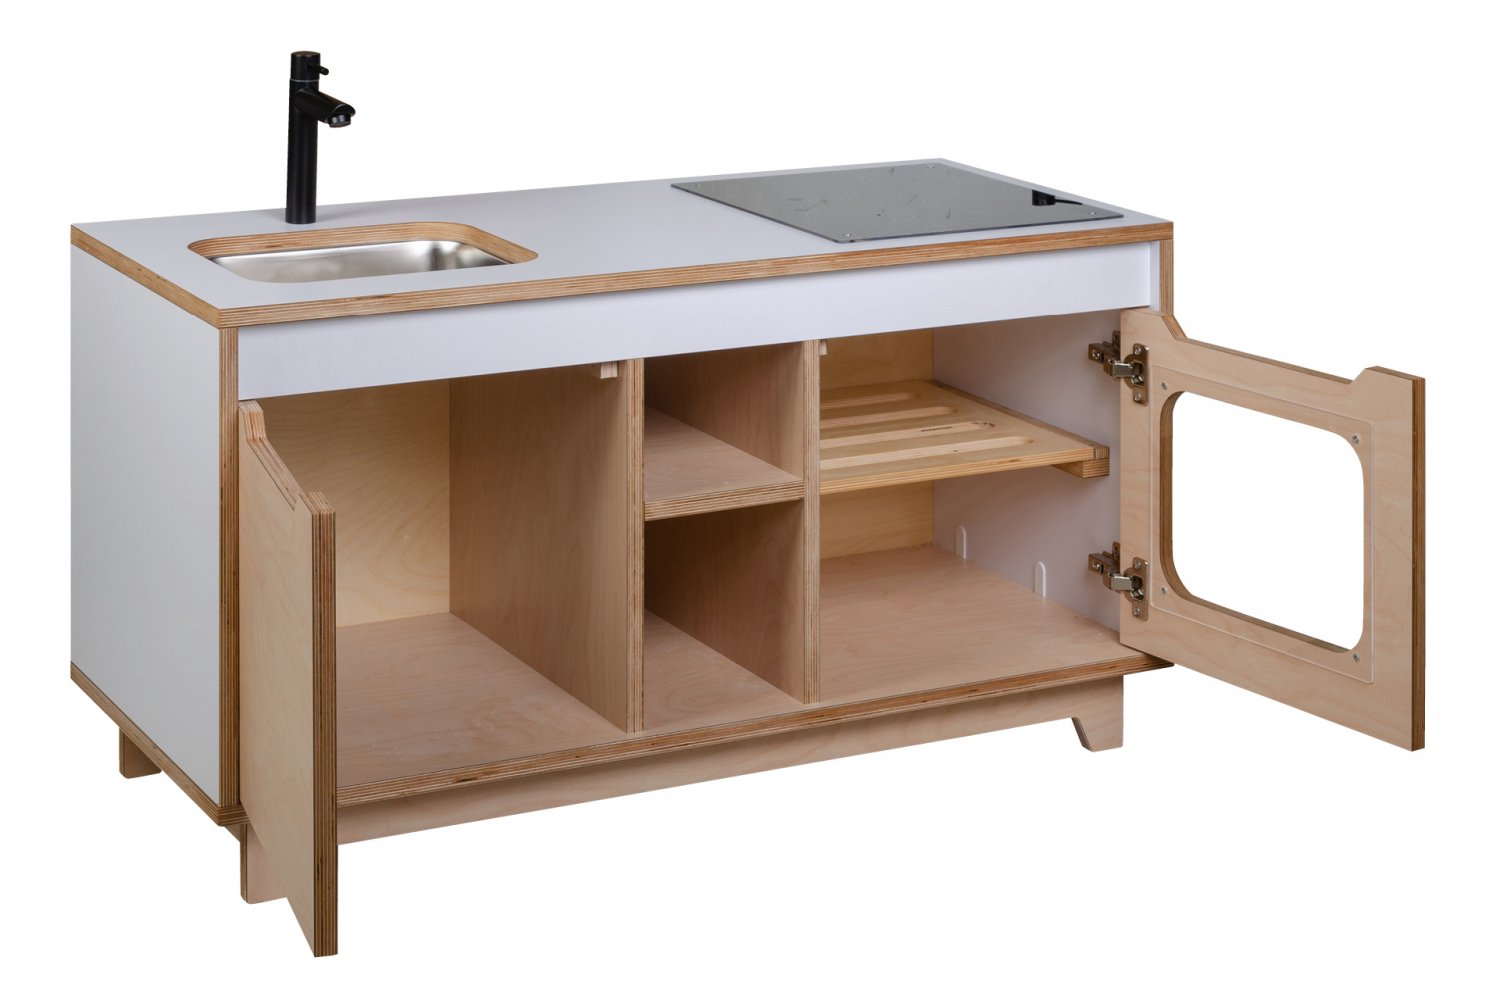 Wooden Plywood Kitchen sink & oven WHITE